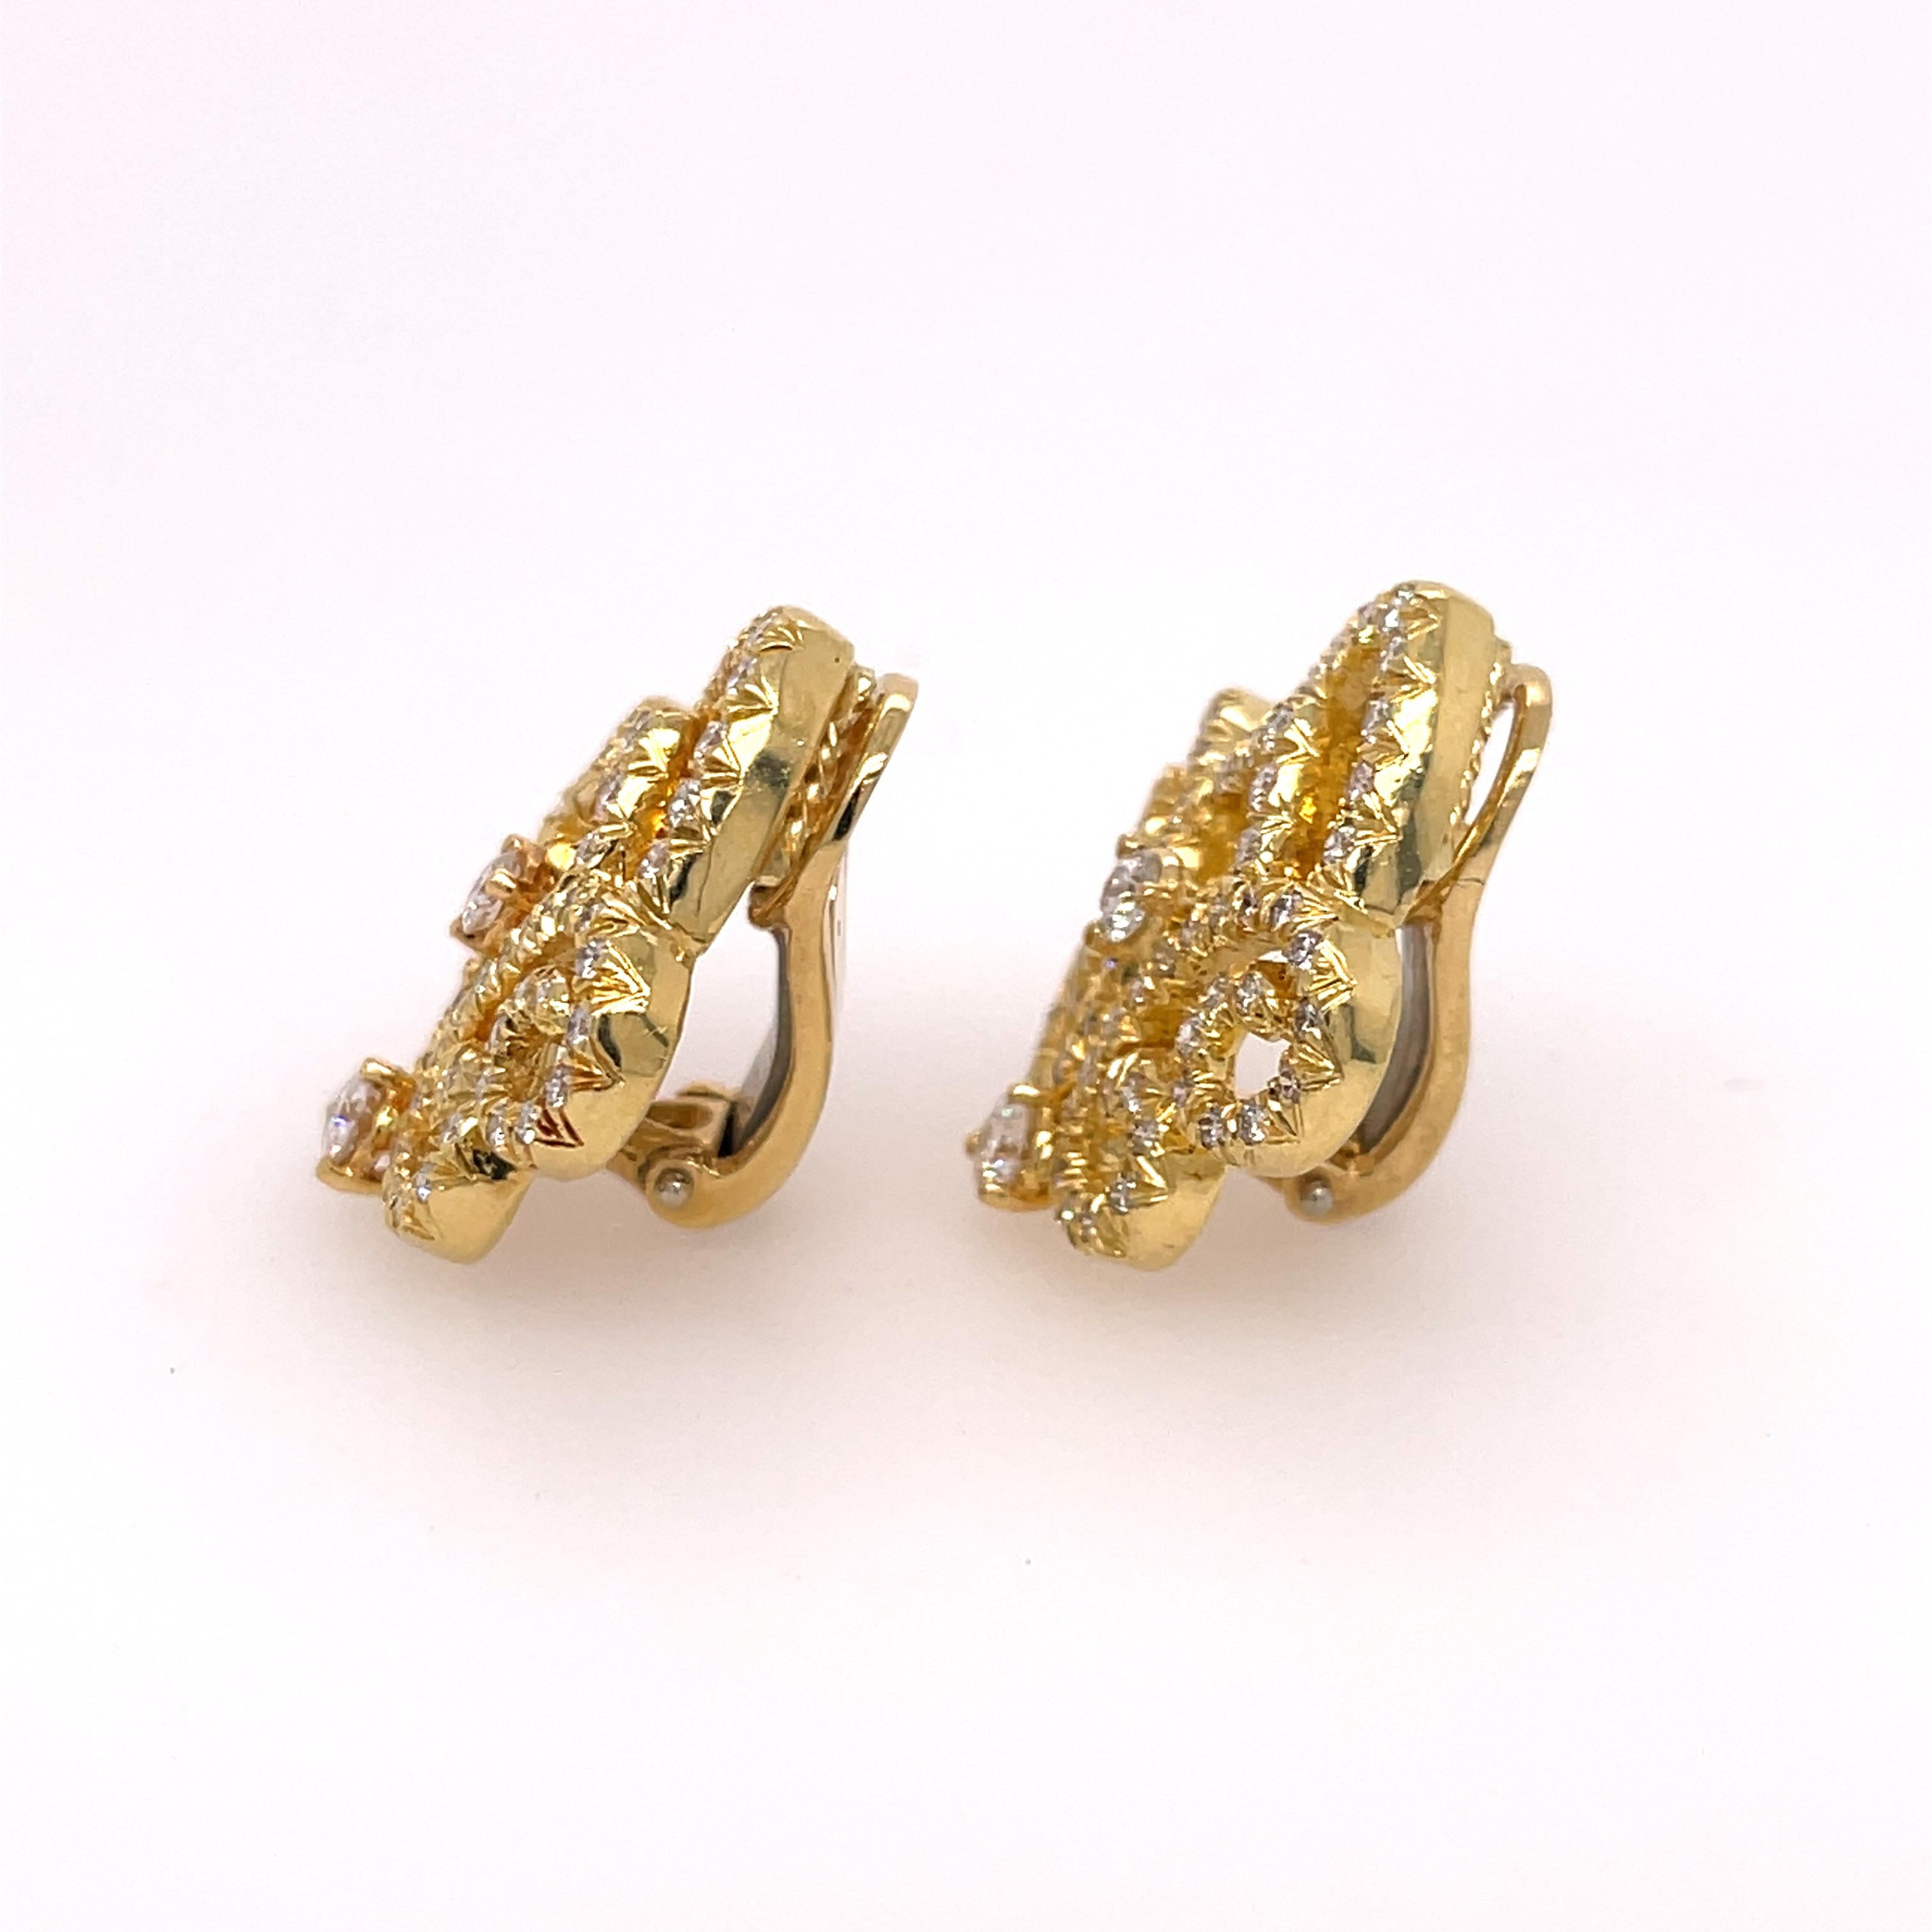 Clip On Henry Dunay Yellow Gold Ornate Diamond Earrings, fleur de lis. Stamped 750 and Dunay hallmark. 